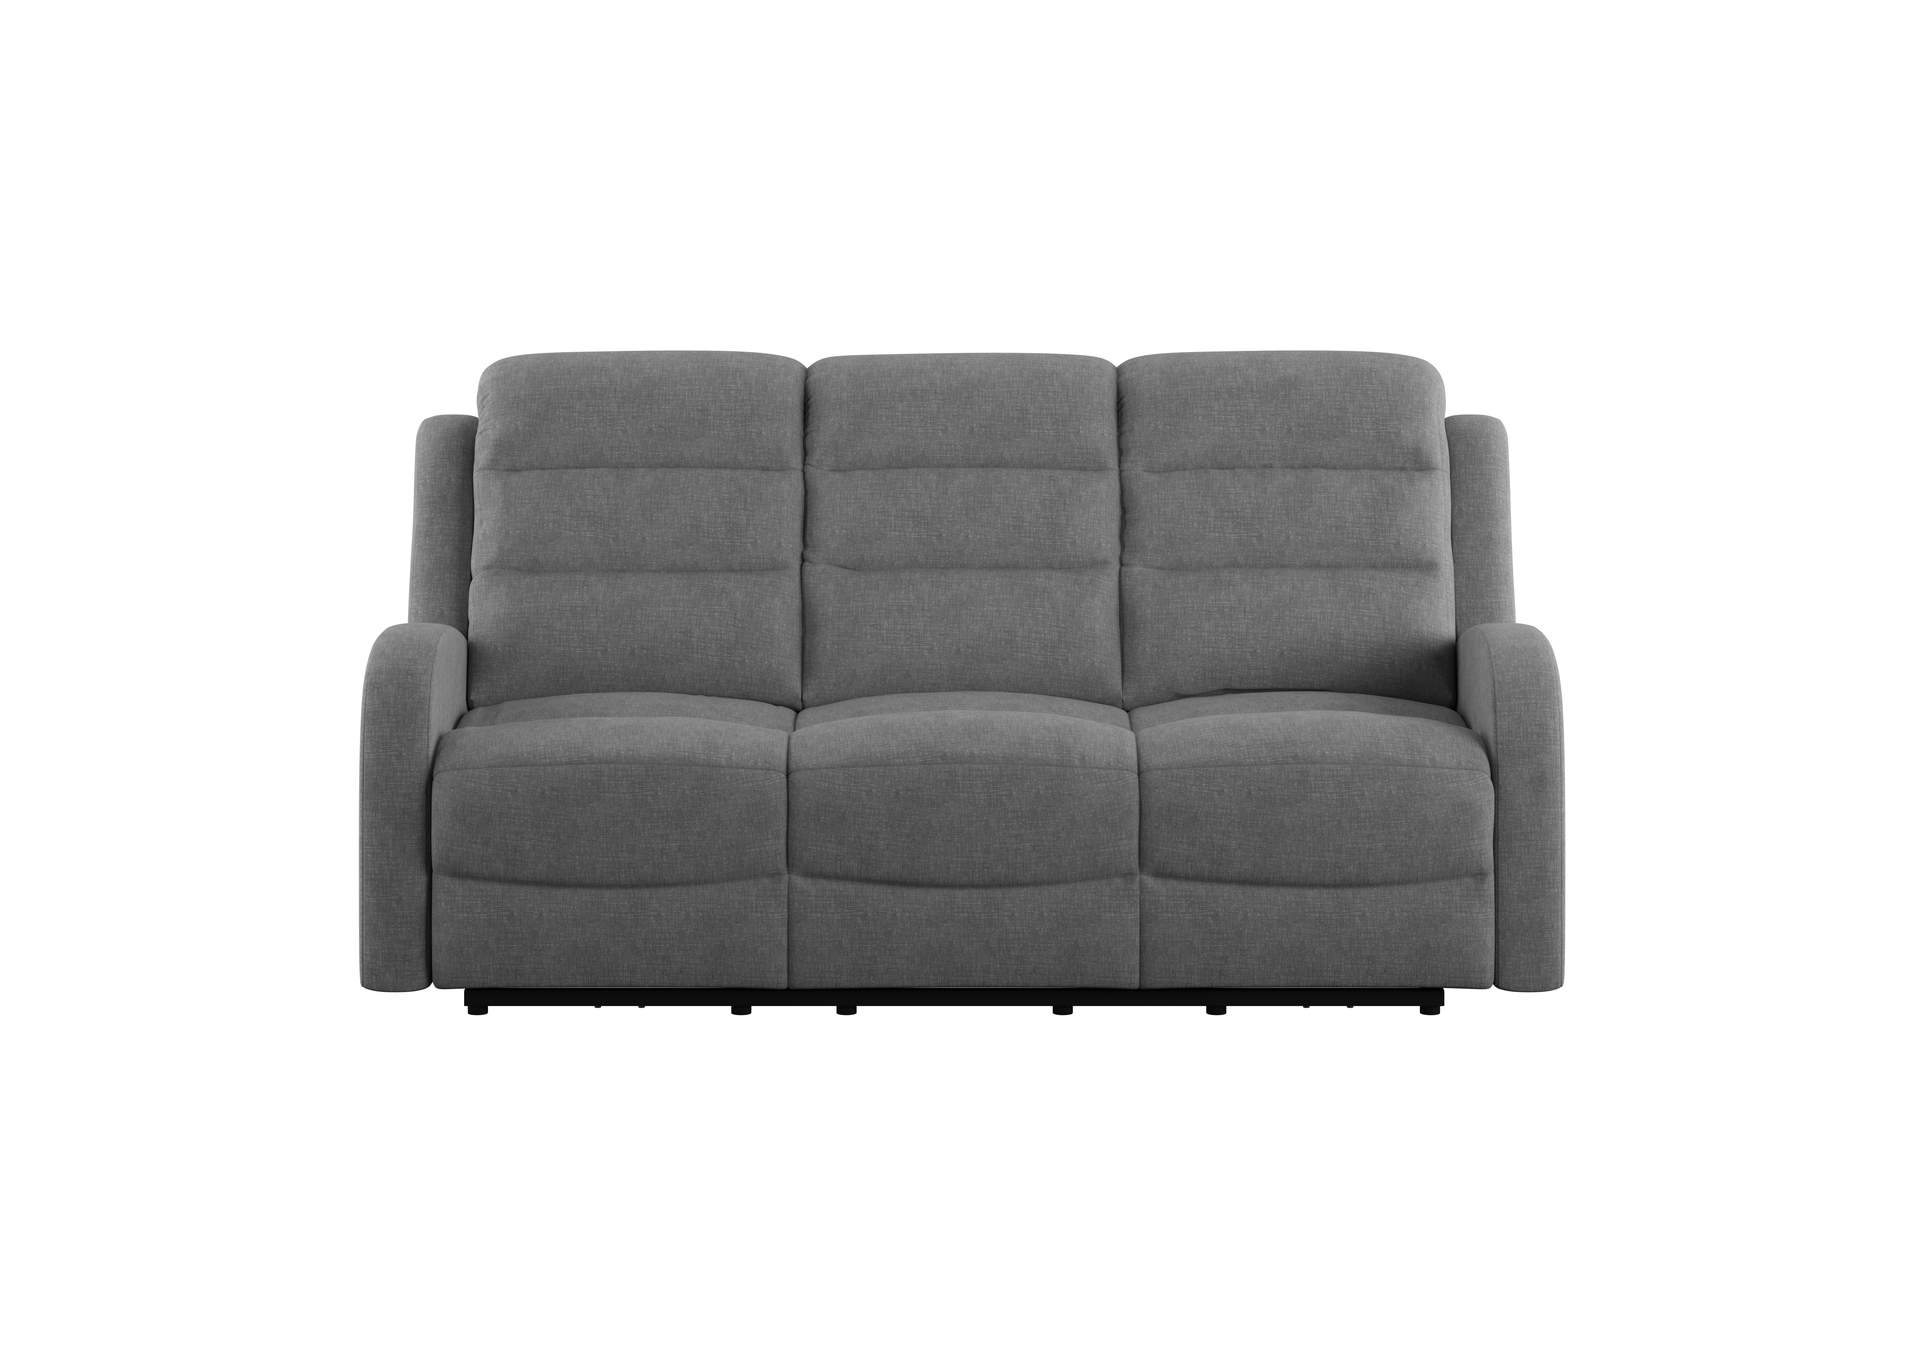 Harvey Dual Power Sofa Recliner And Headrest,Emerald Home Furnishings